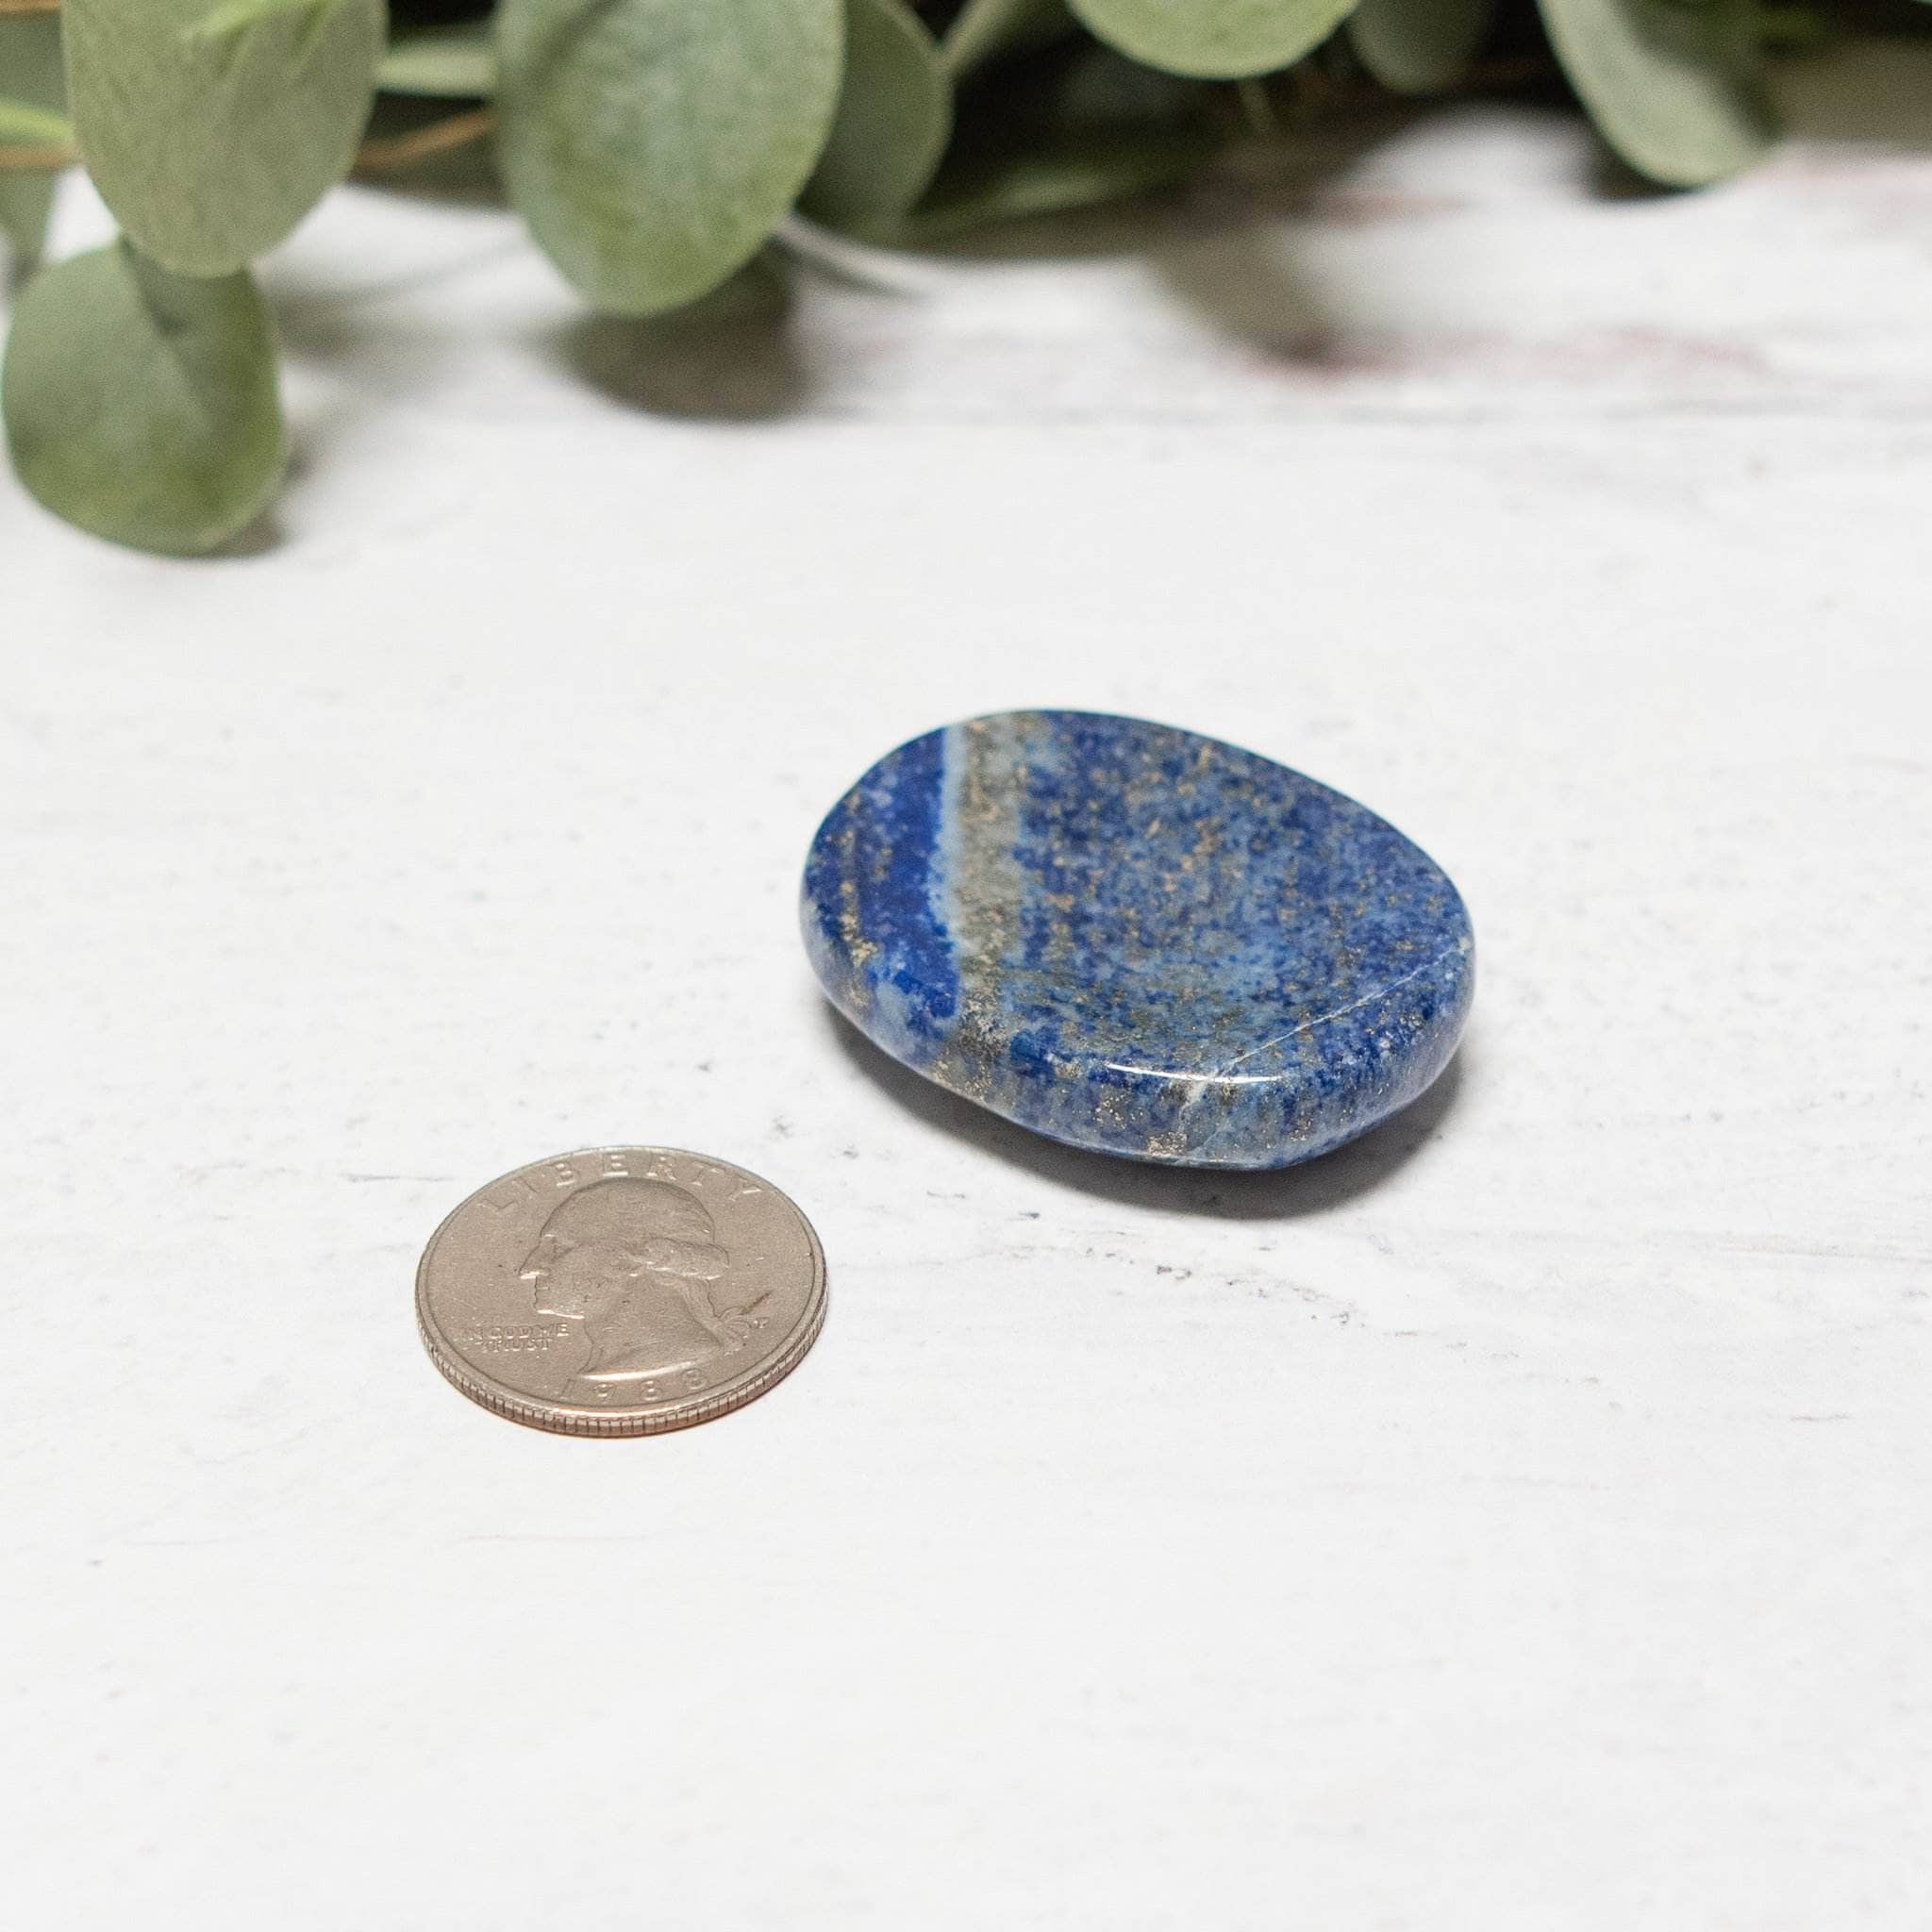  Lapis Lazuli Worry Stone by Tiny Rituals Tiny Rituals Perfumarie